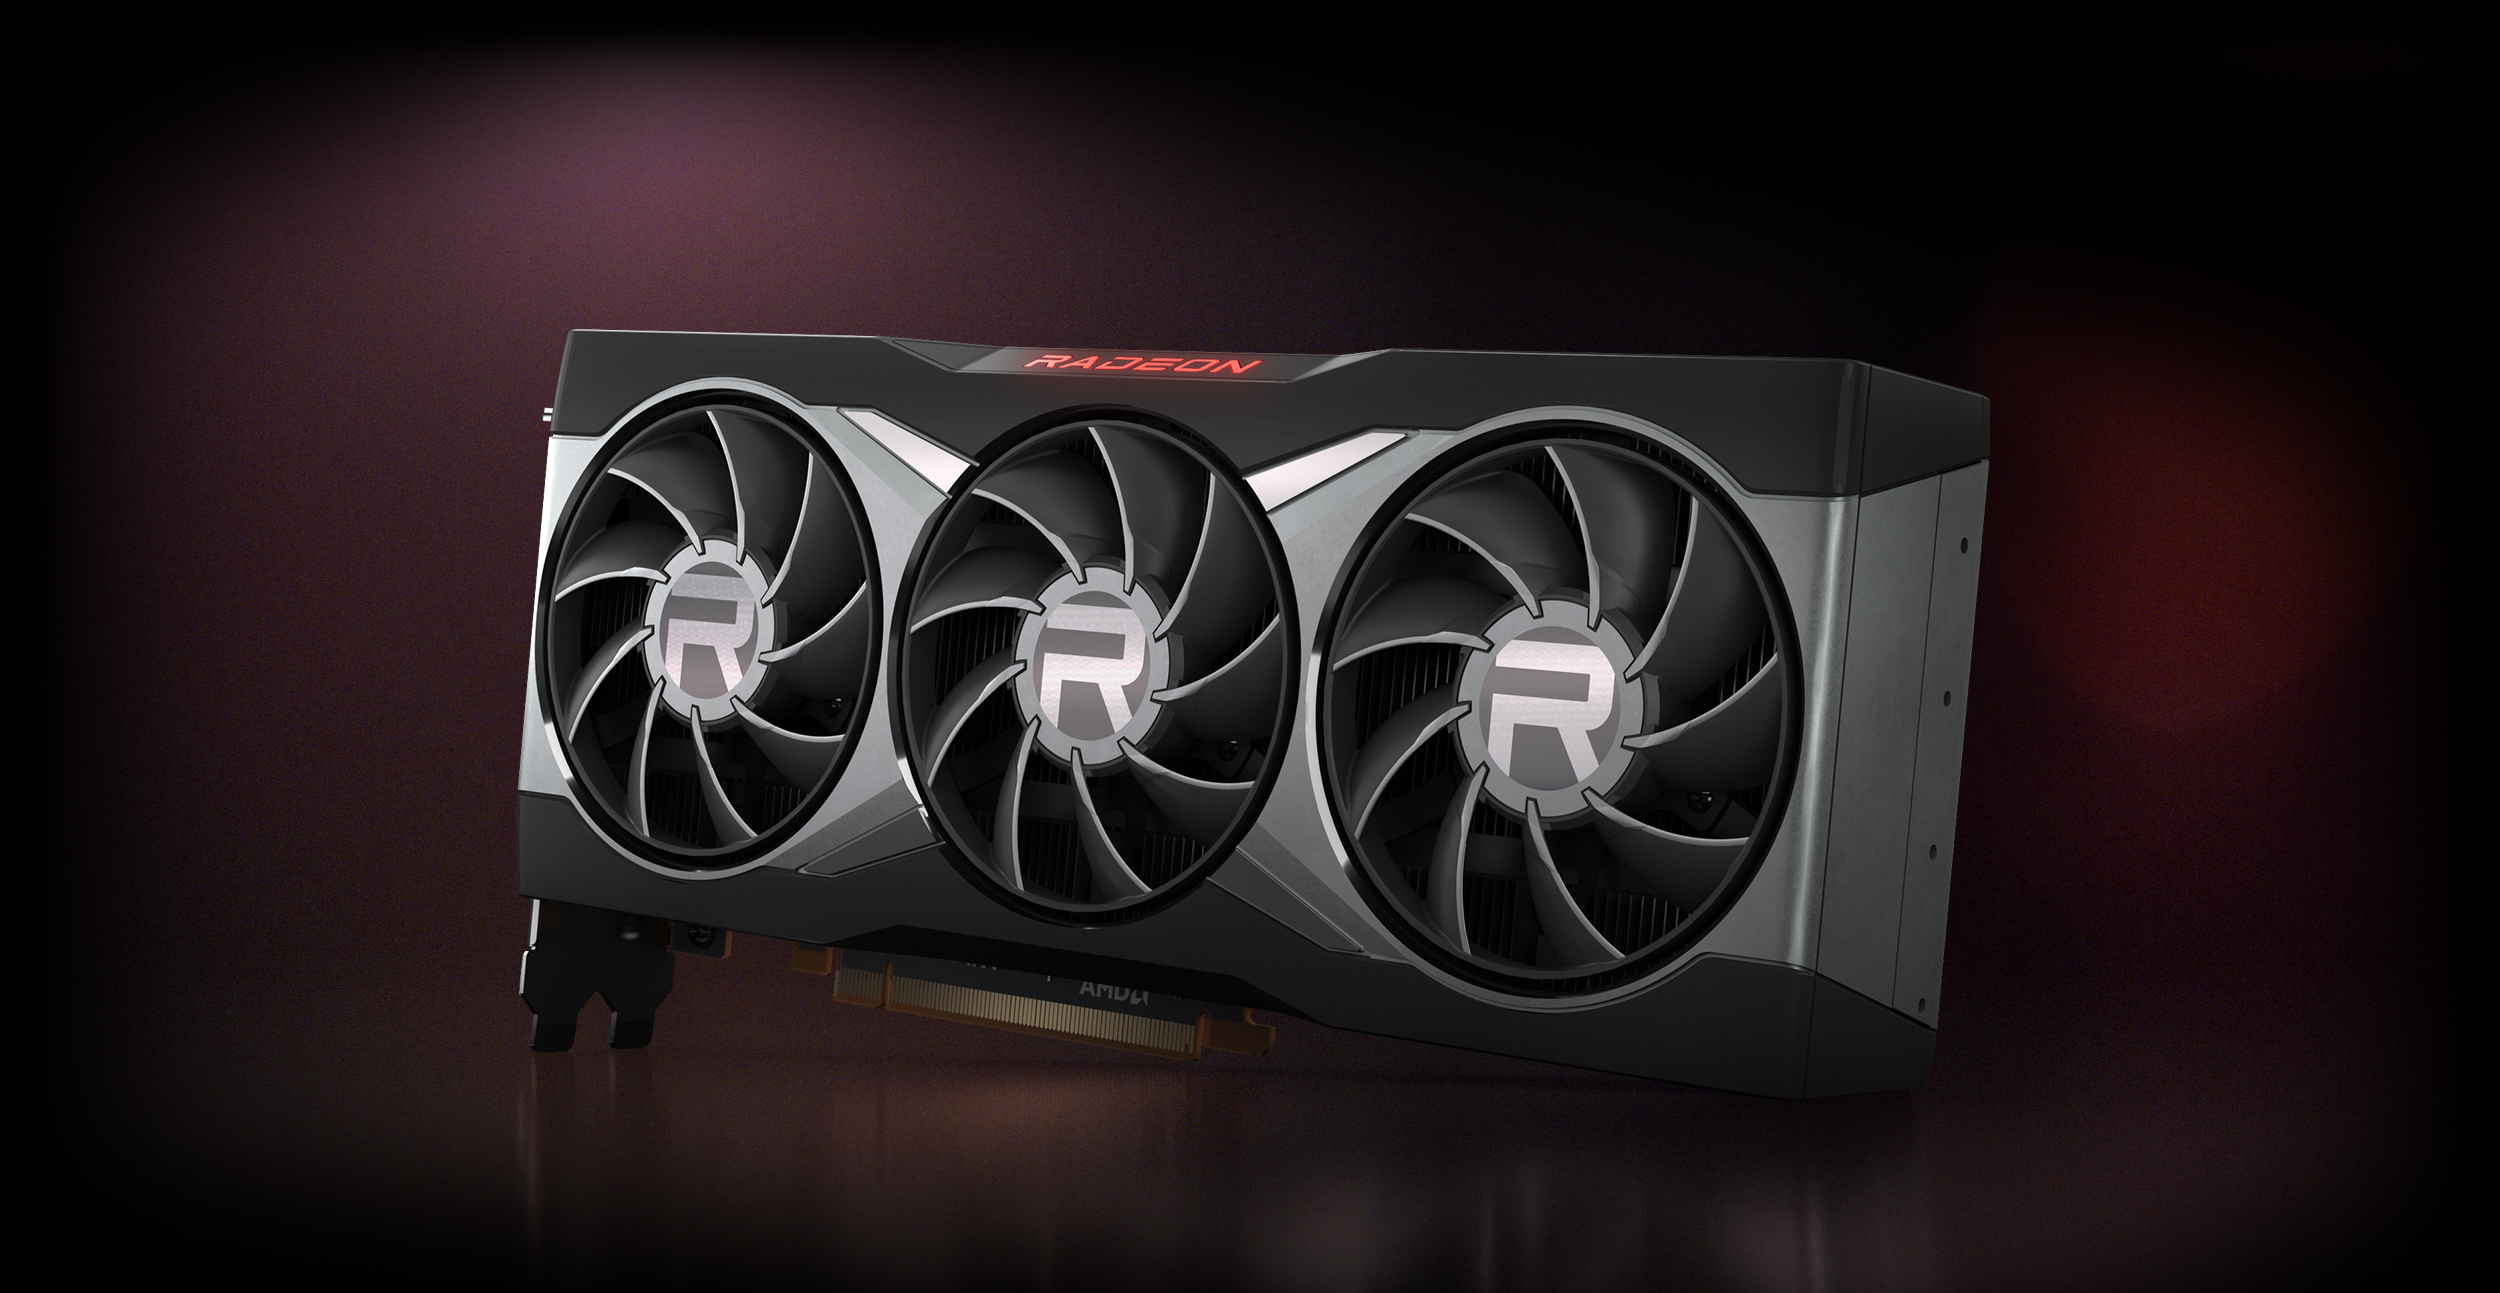 AMD Radeon RX 6800 XT Specs